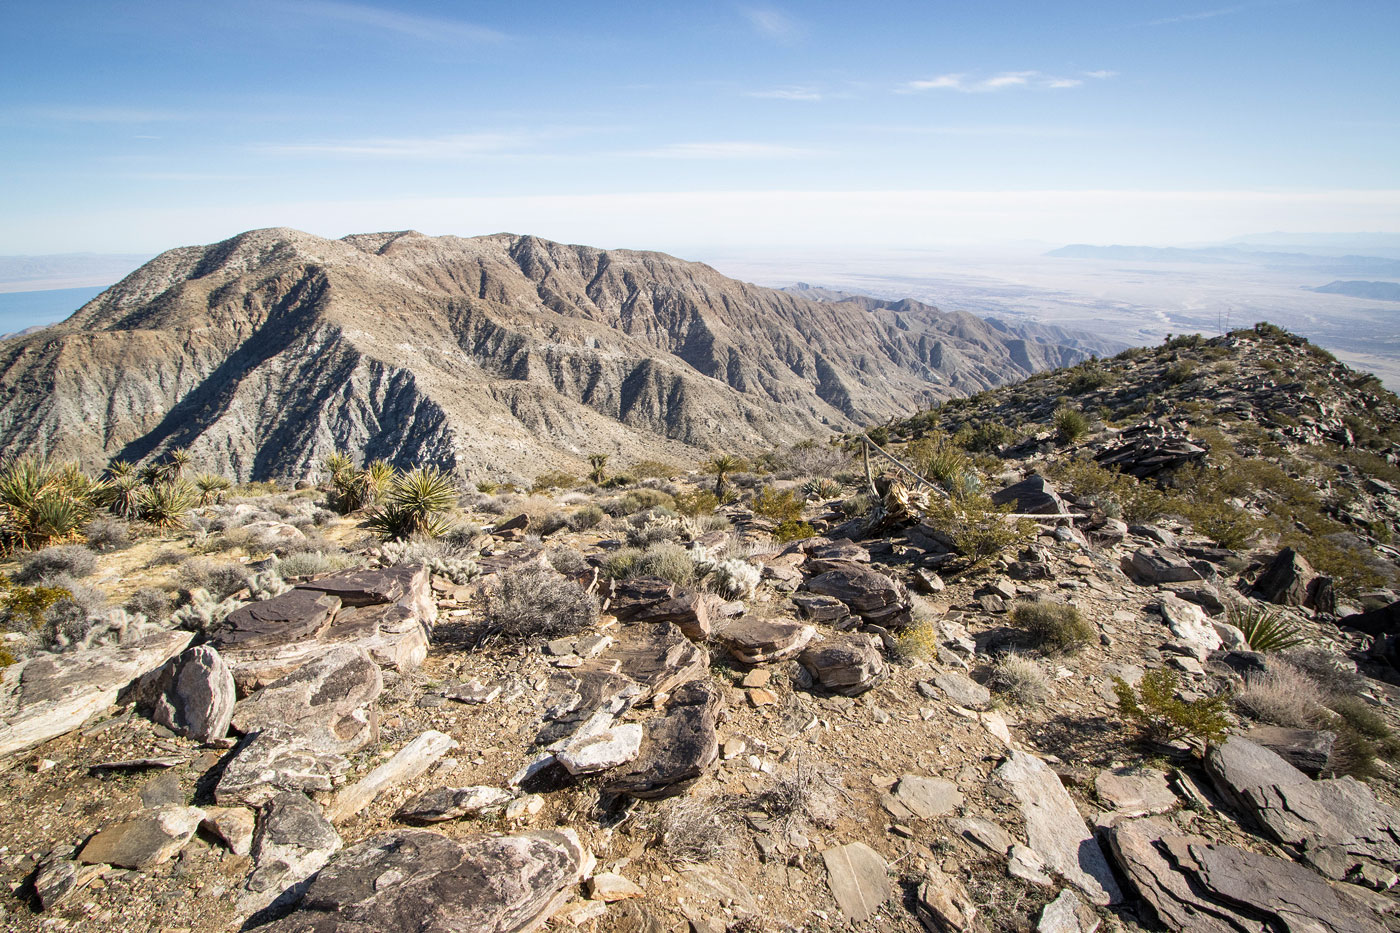 Hike Rabbit Peak, Mile High Mountain, Rosa Point, Pyramid Peak in Anza-Borrego Desert State Park, California - Stav is Lost